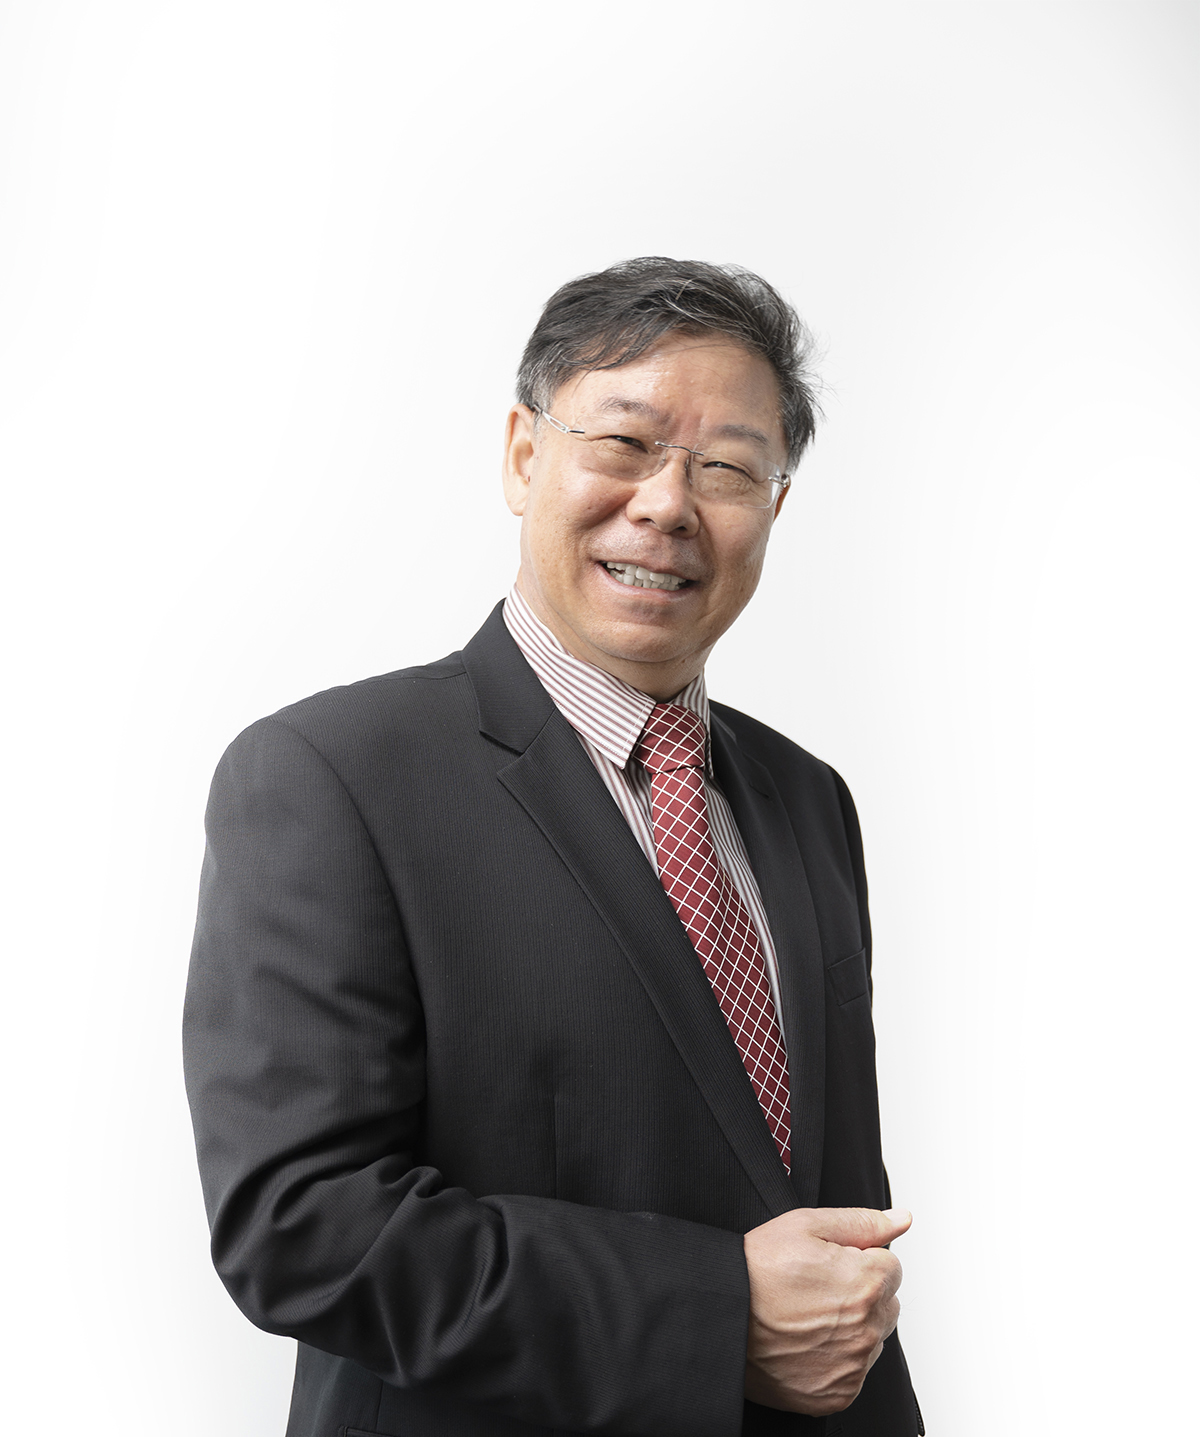 Dr Steven Gong, the Director